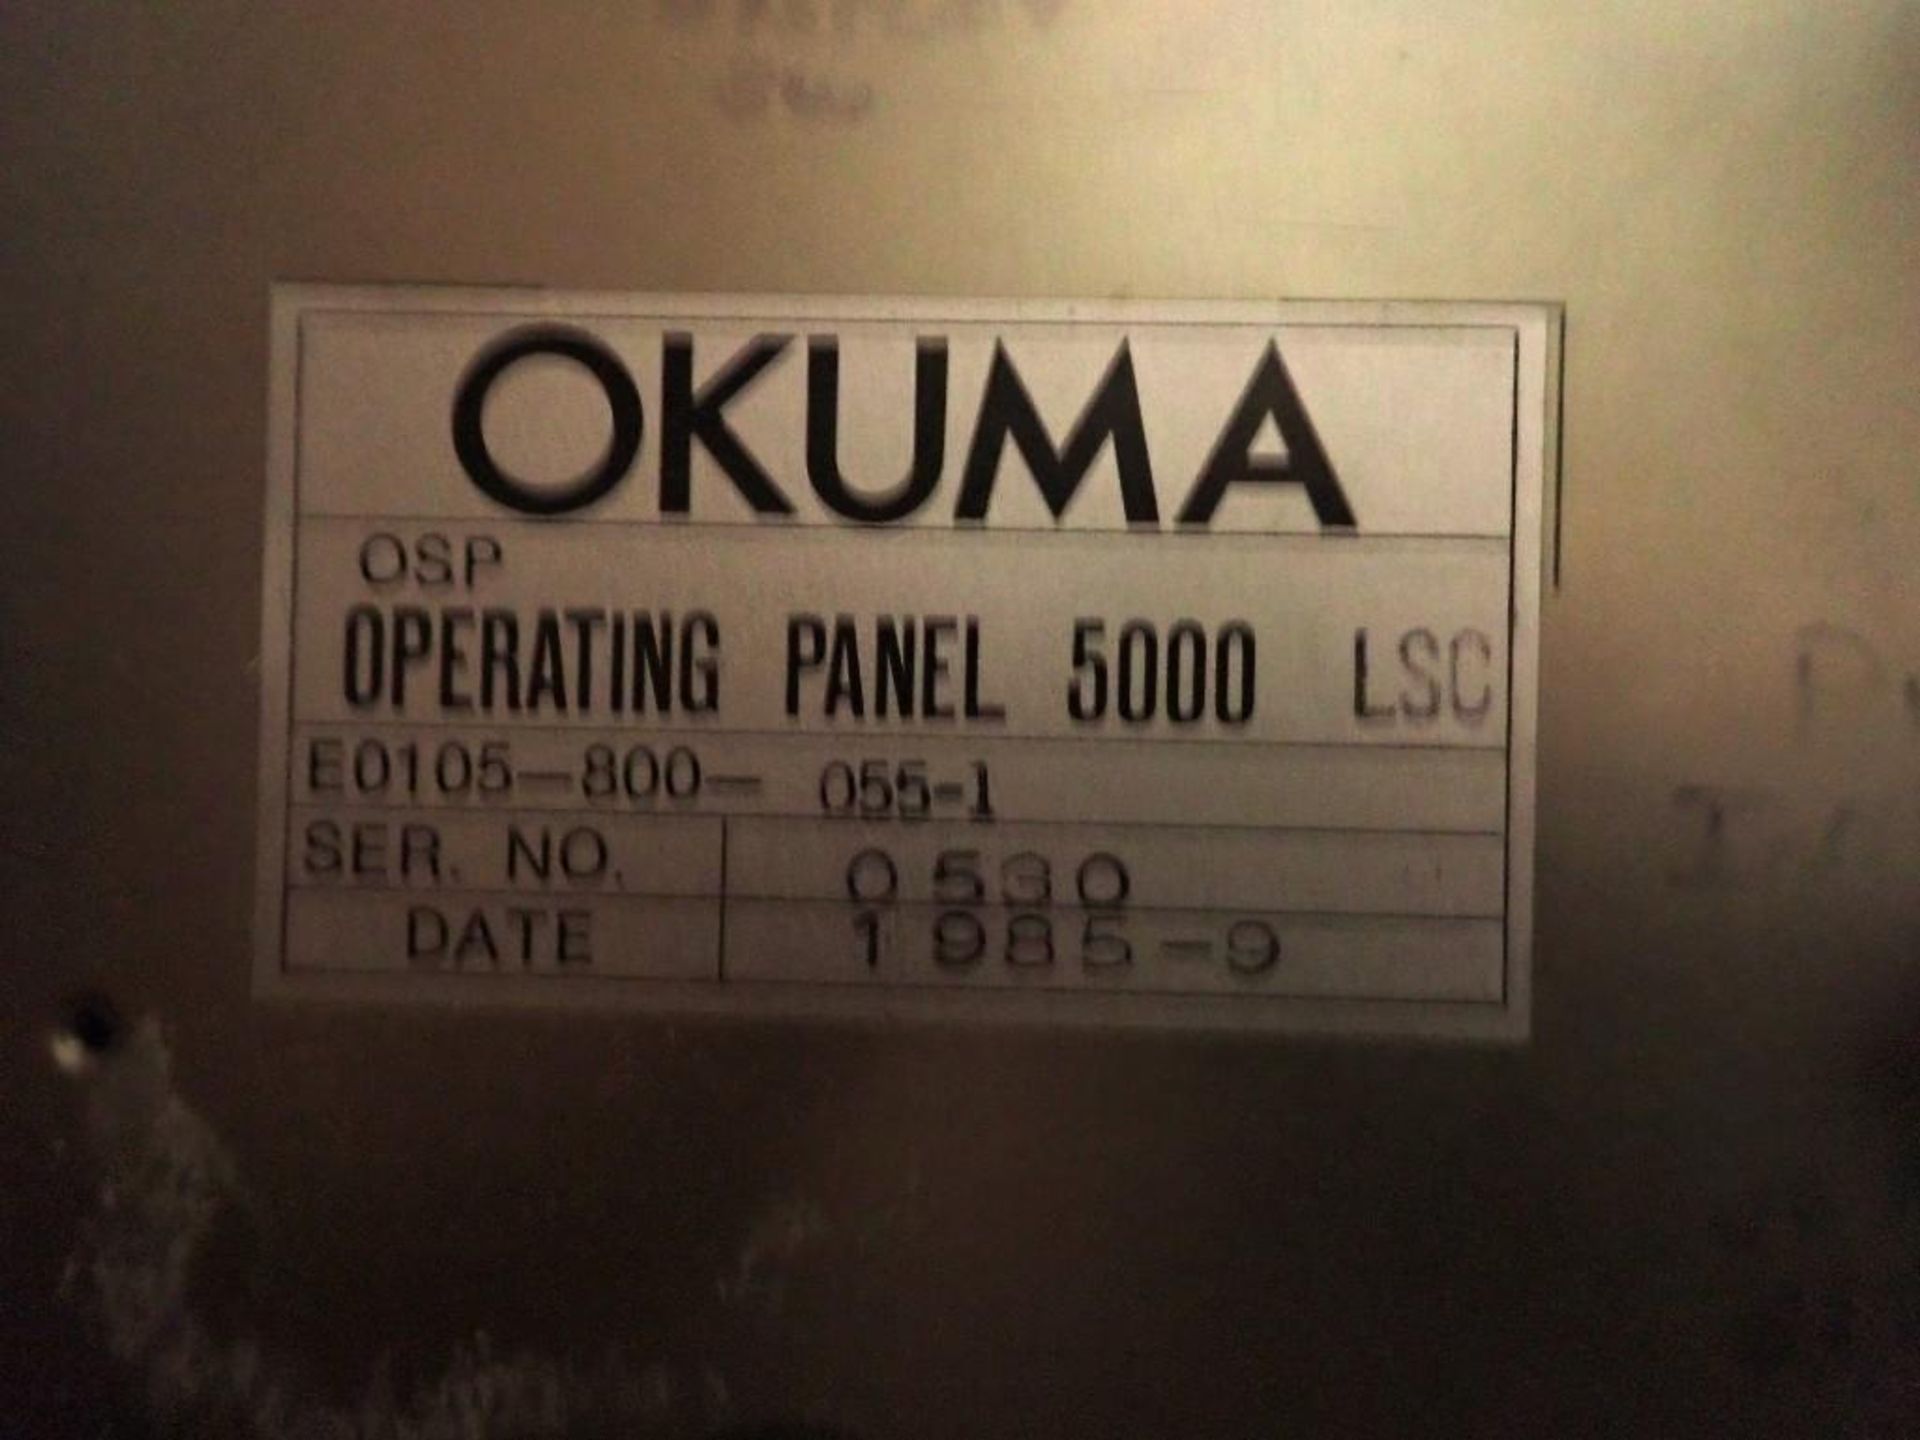 Okuma #E0105-800-055-1 OSP Operating Panel 5000 LSC - Image 3 of 4